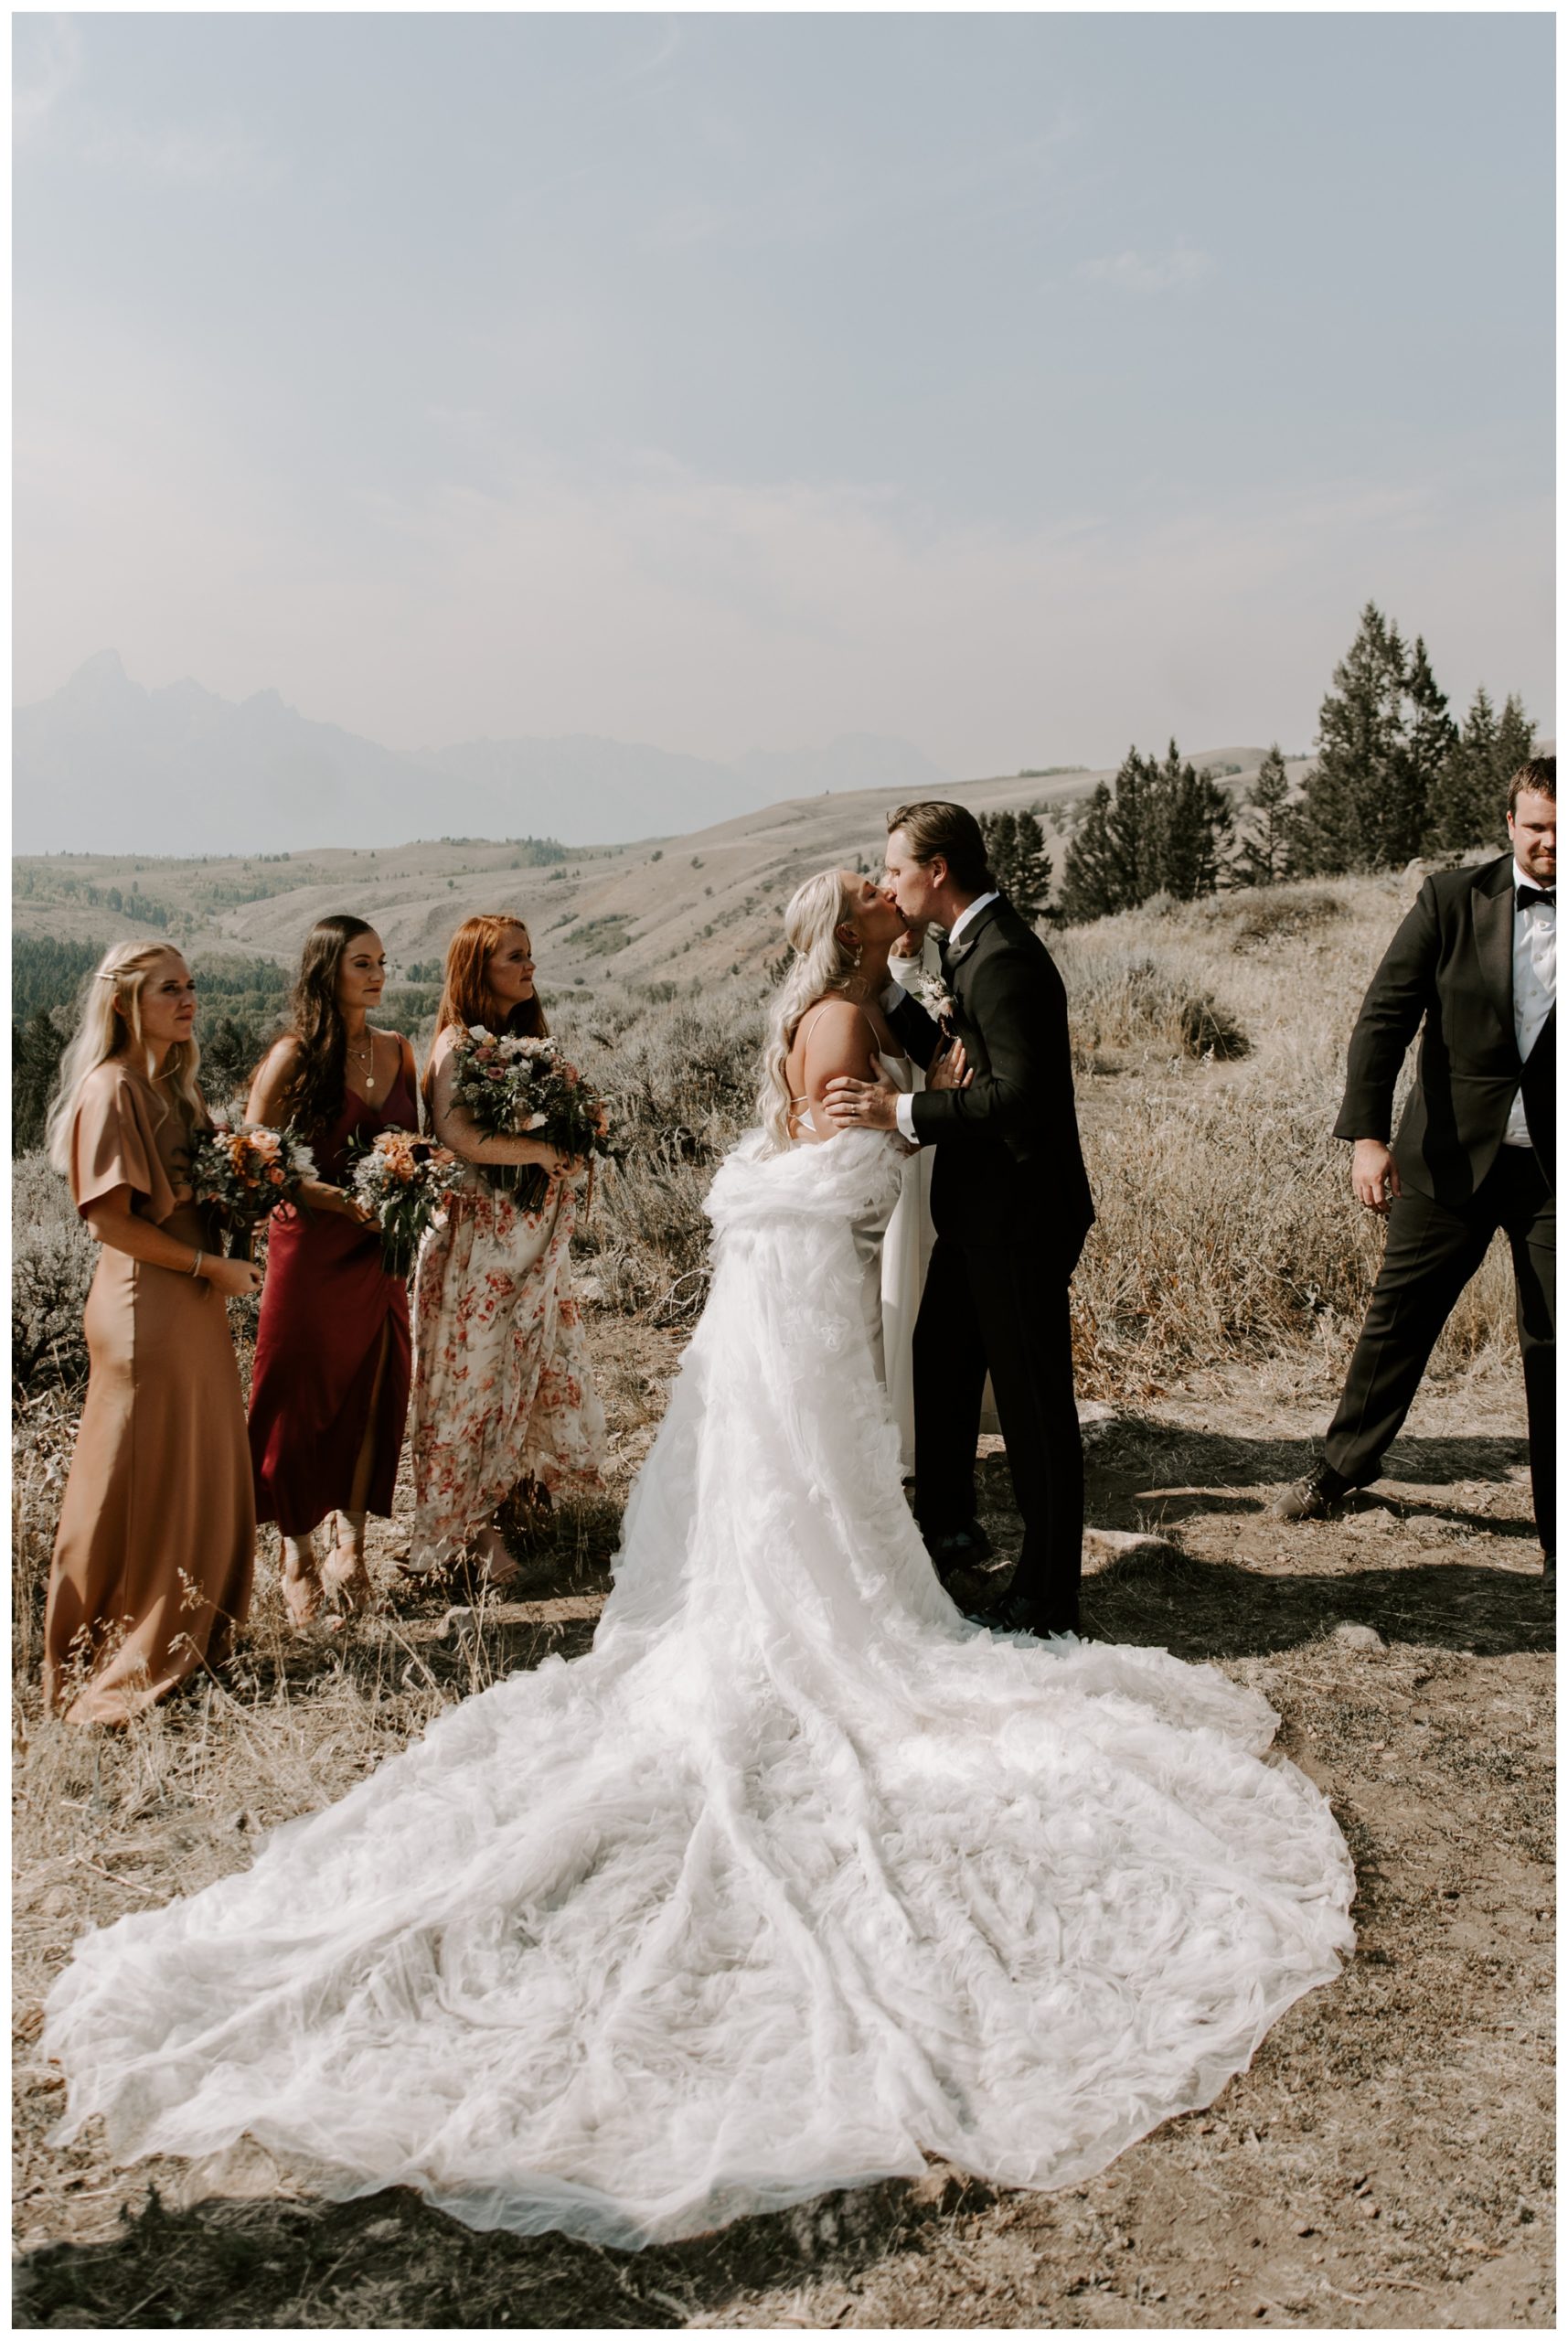 Grand Teton wedding locations